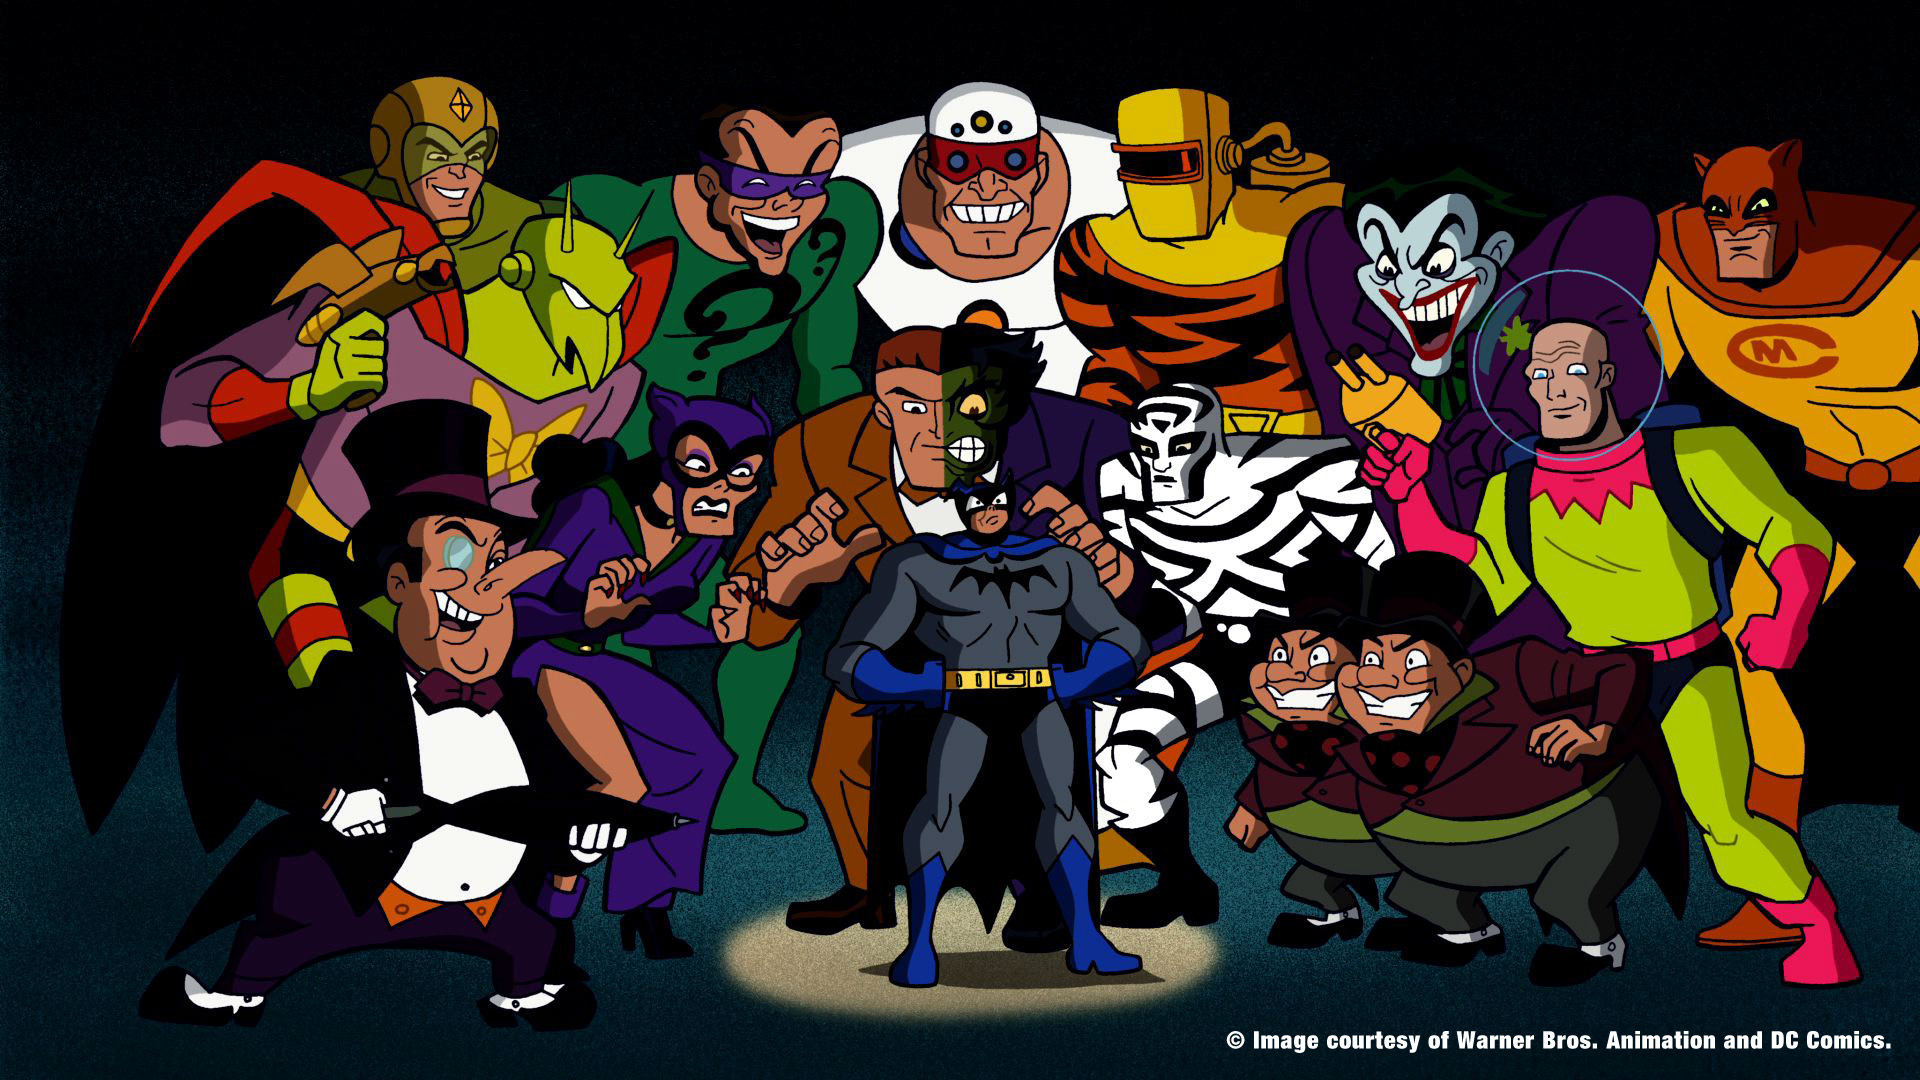 fondos de pantalla de villanos de batman,dibujos animados,personas,grupo social,dibujos animados,equipo